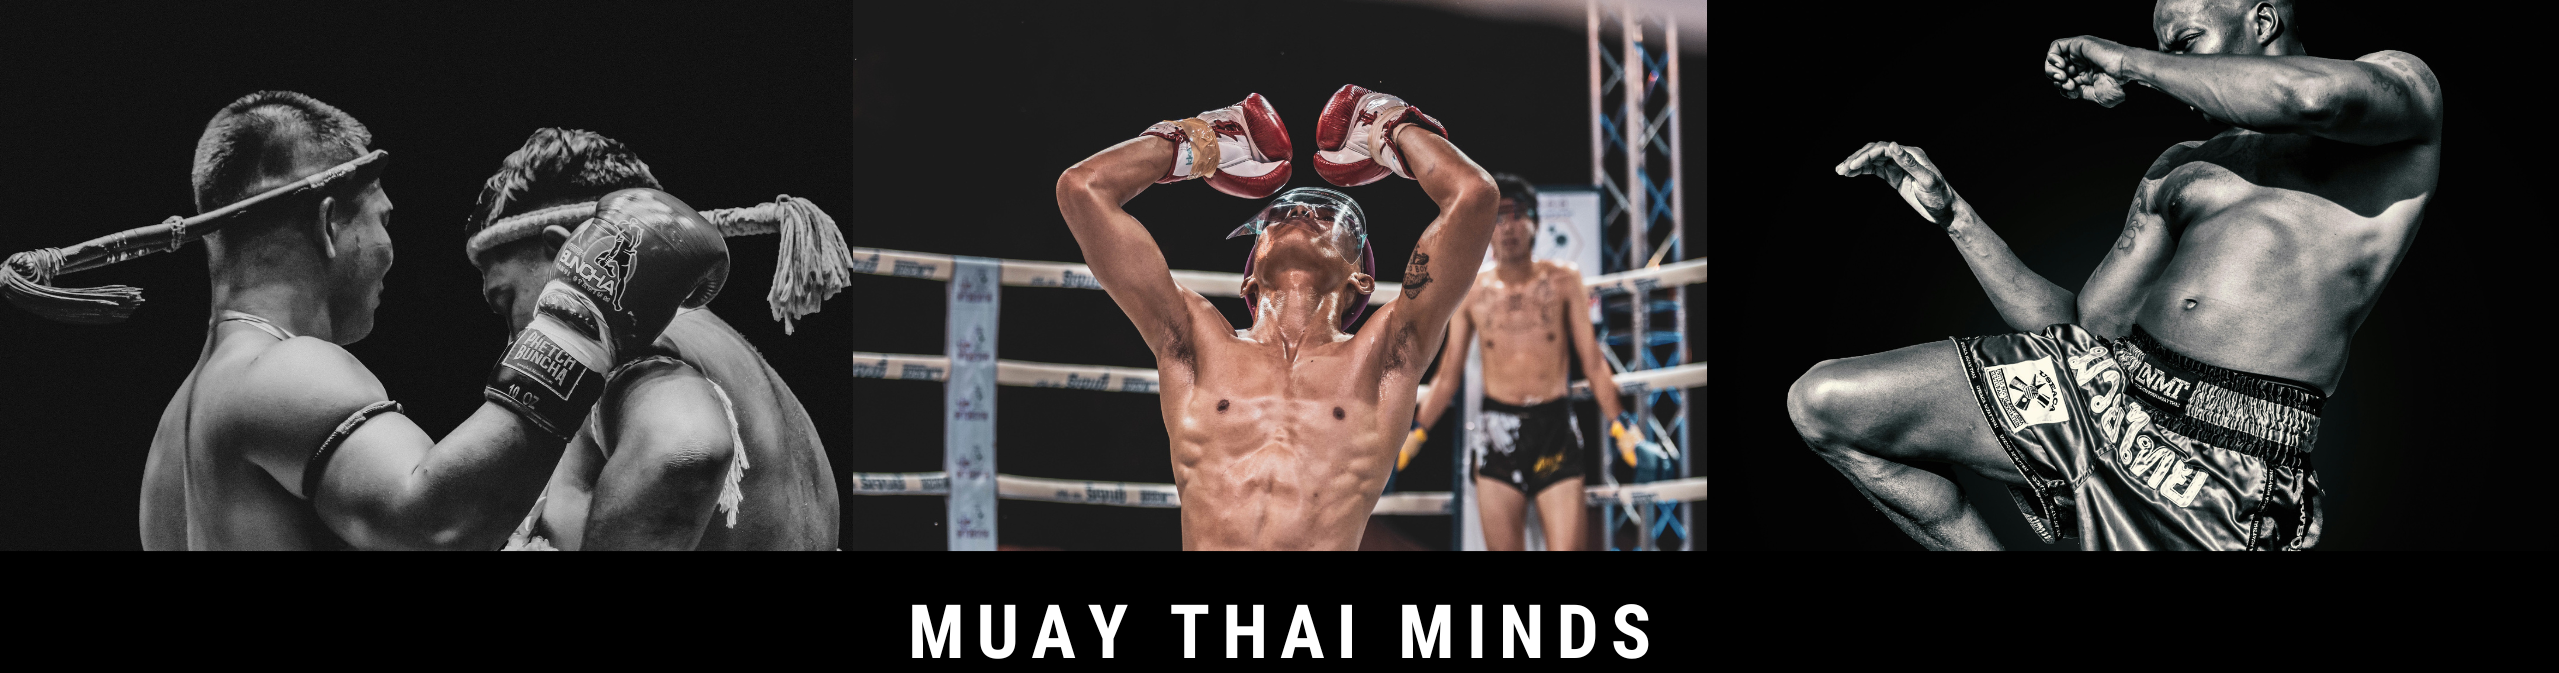 Muay Thai Minds